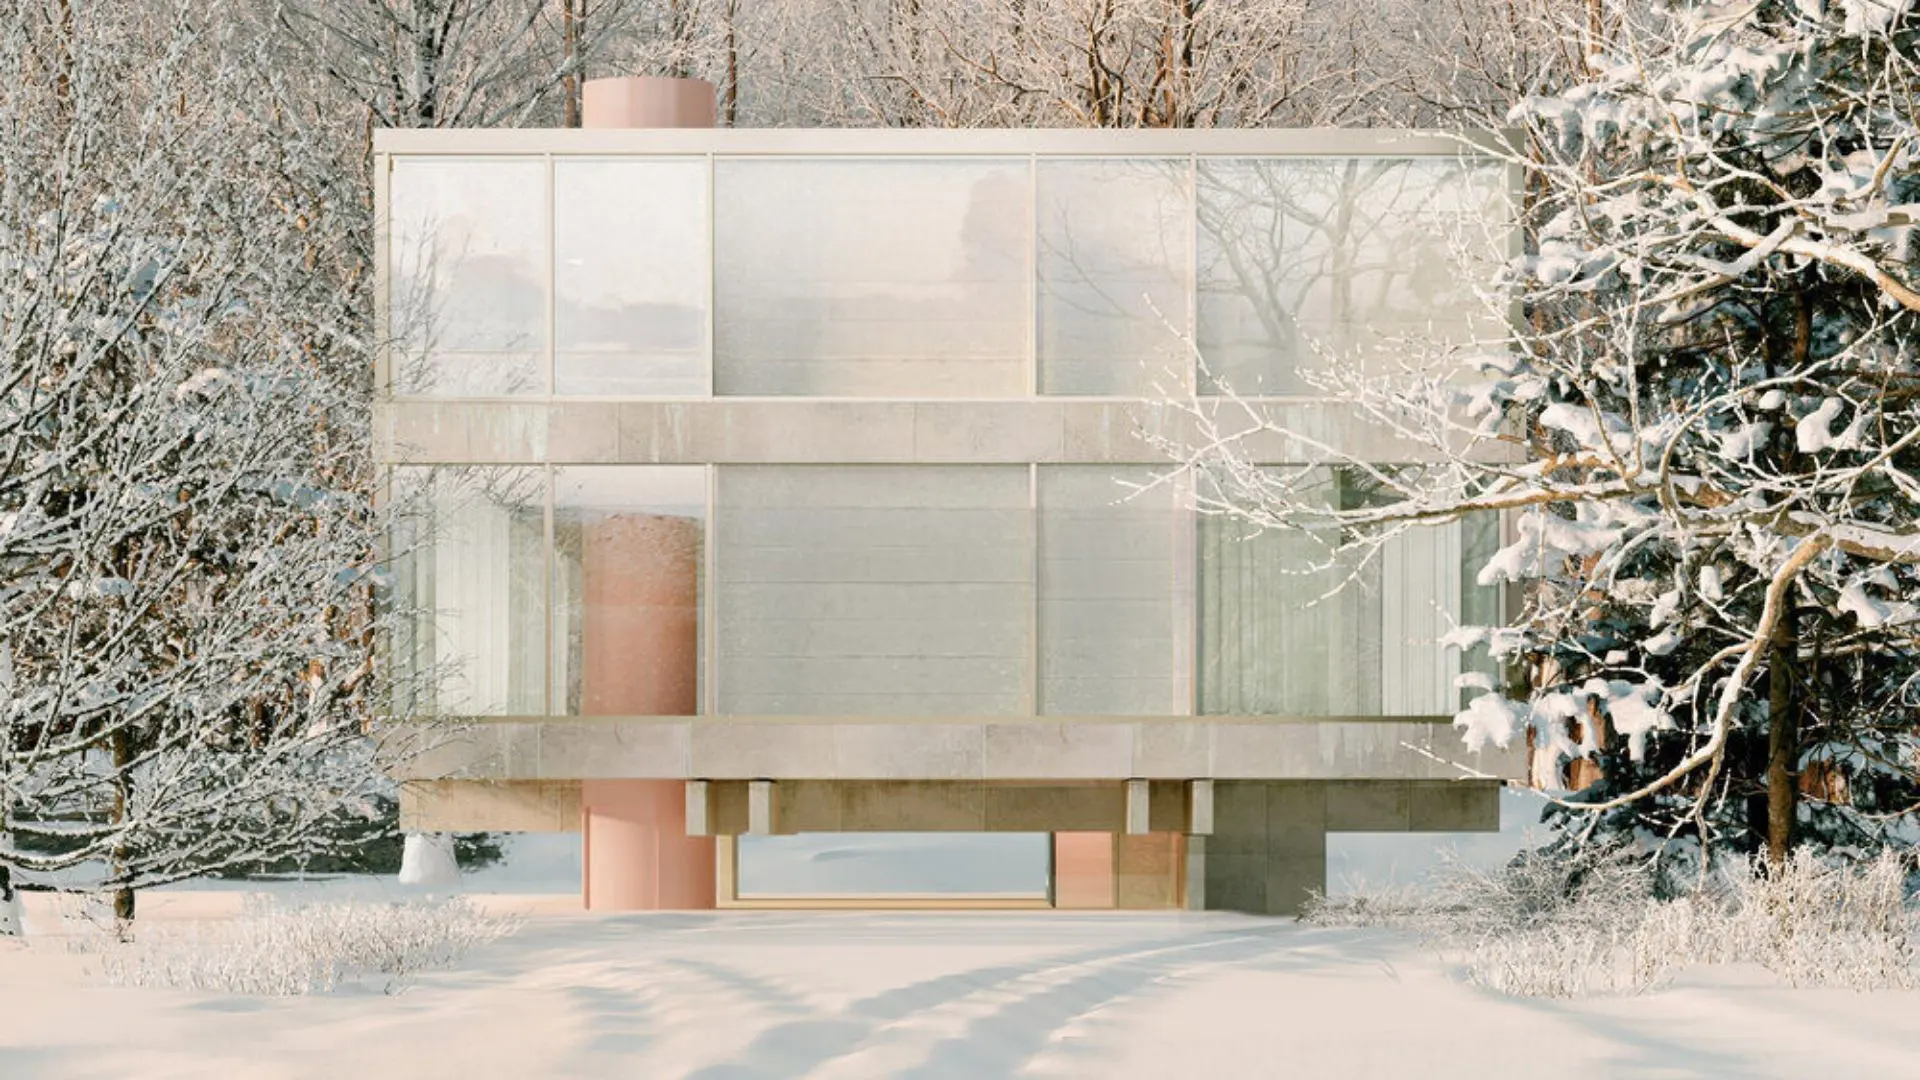 Winter House by Andrés Reisinger _ Metaverse